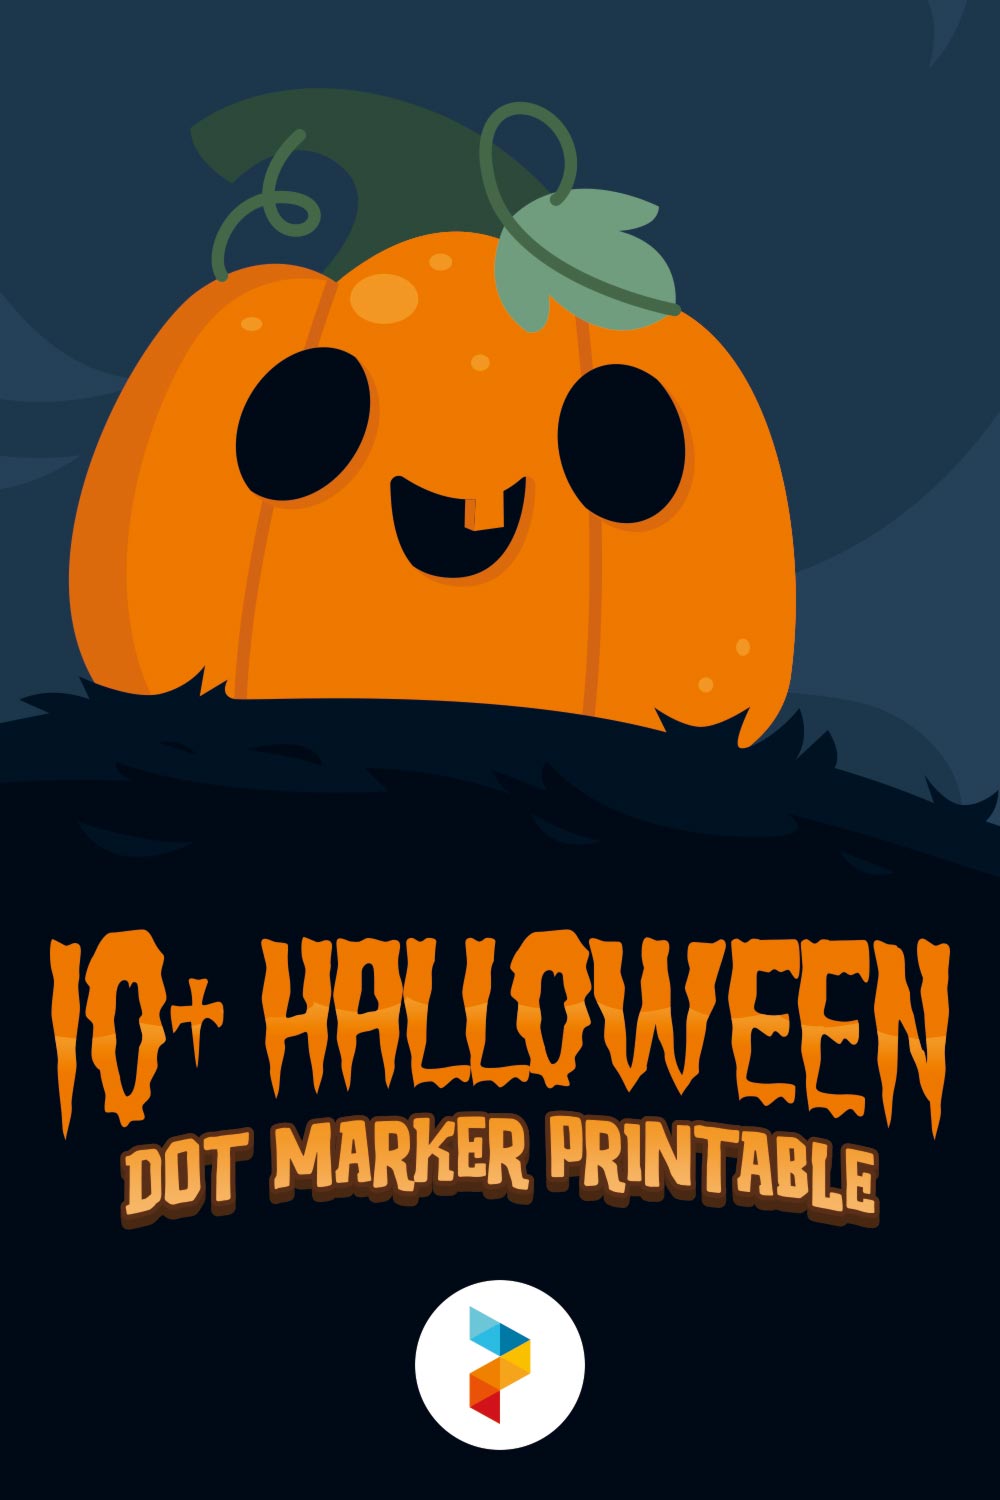 Halloween Dot Marker Printable